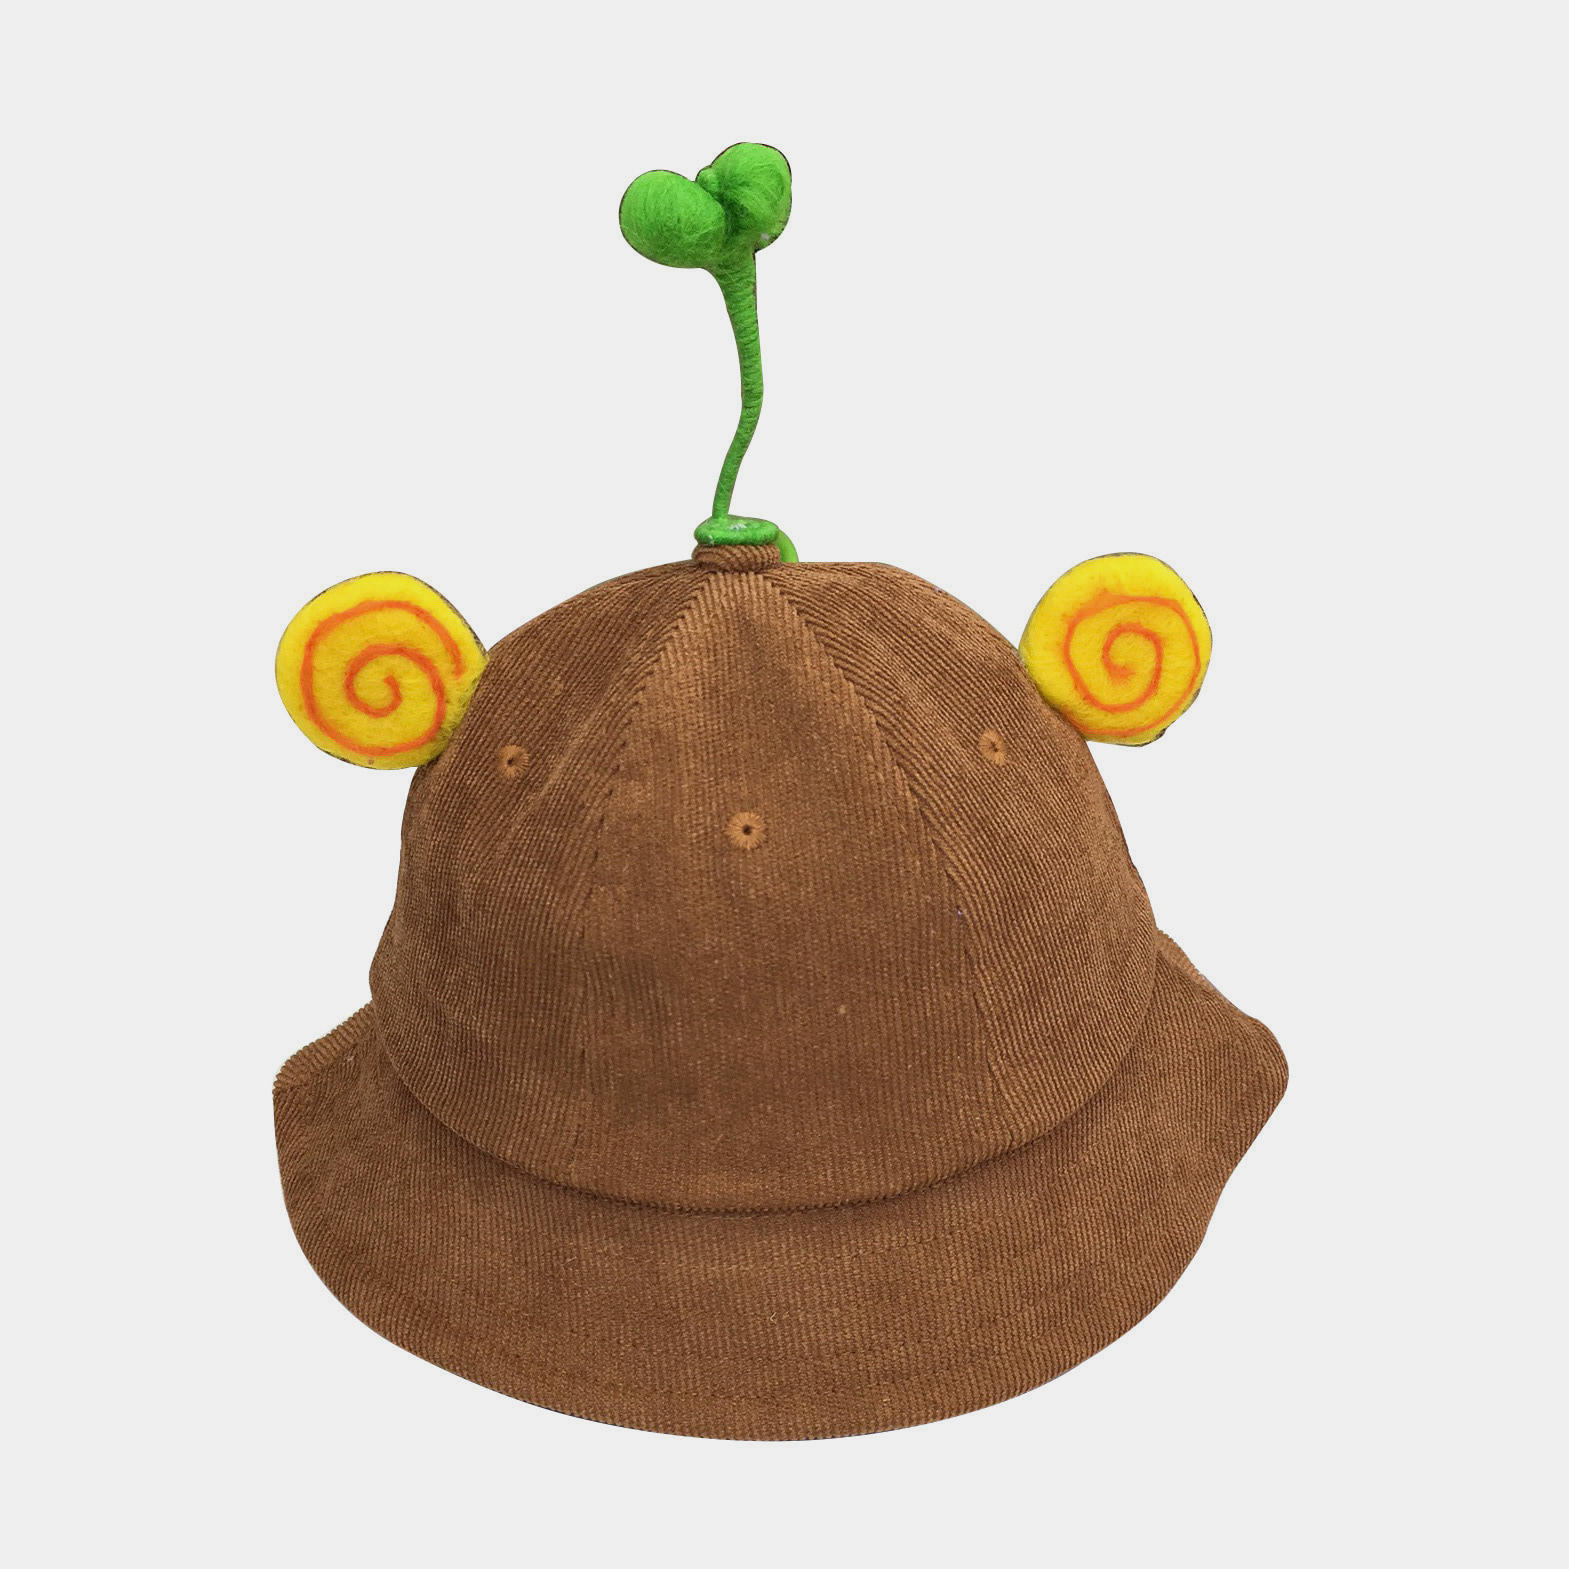 BK00044 3-8 Years Summer Thin Baby Bucket Hat 